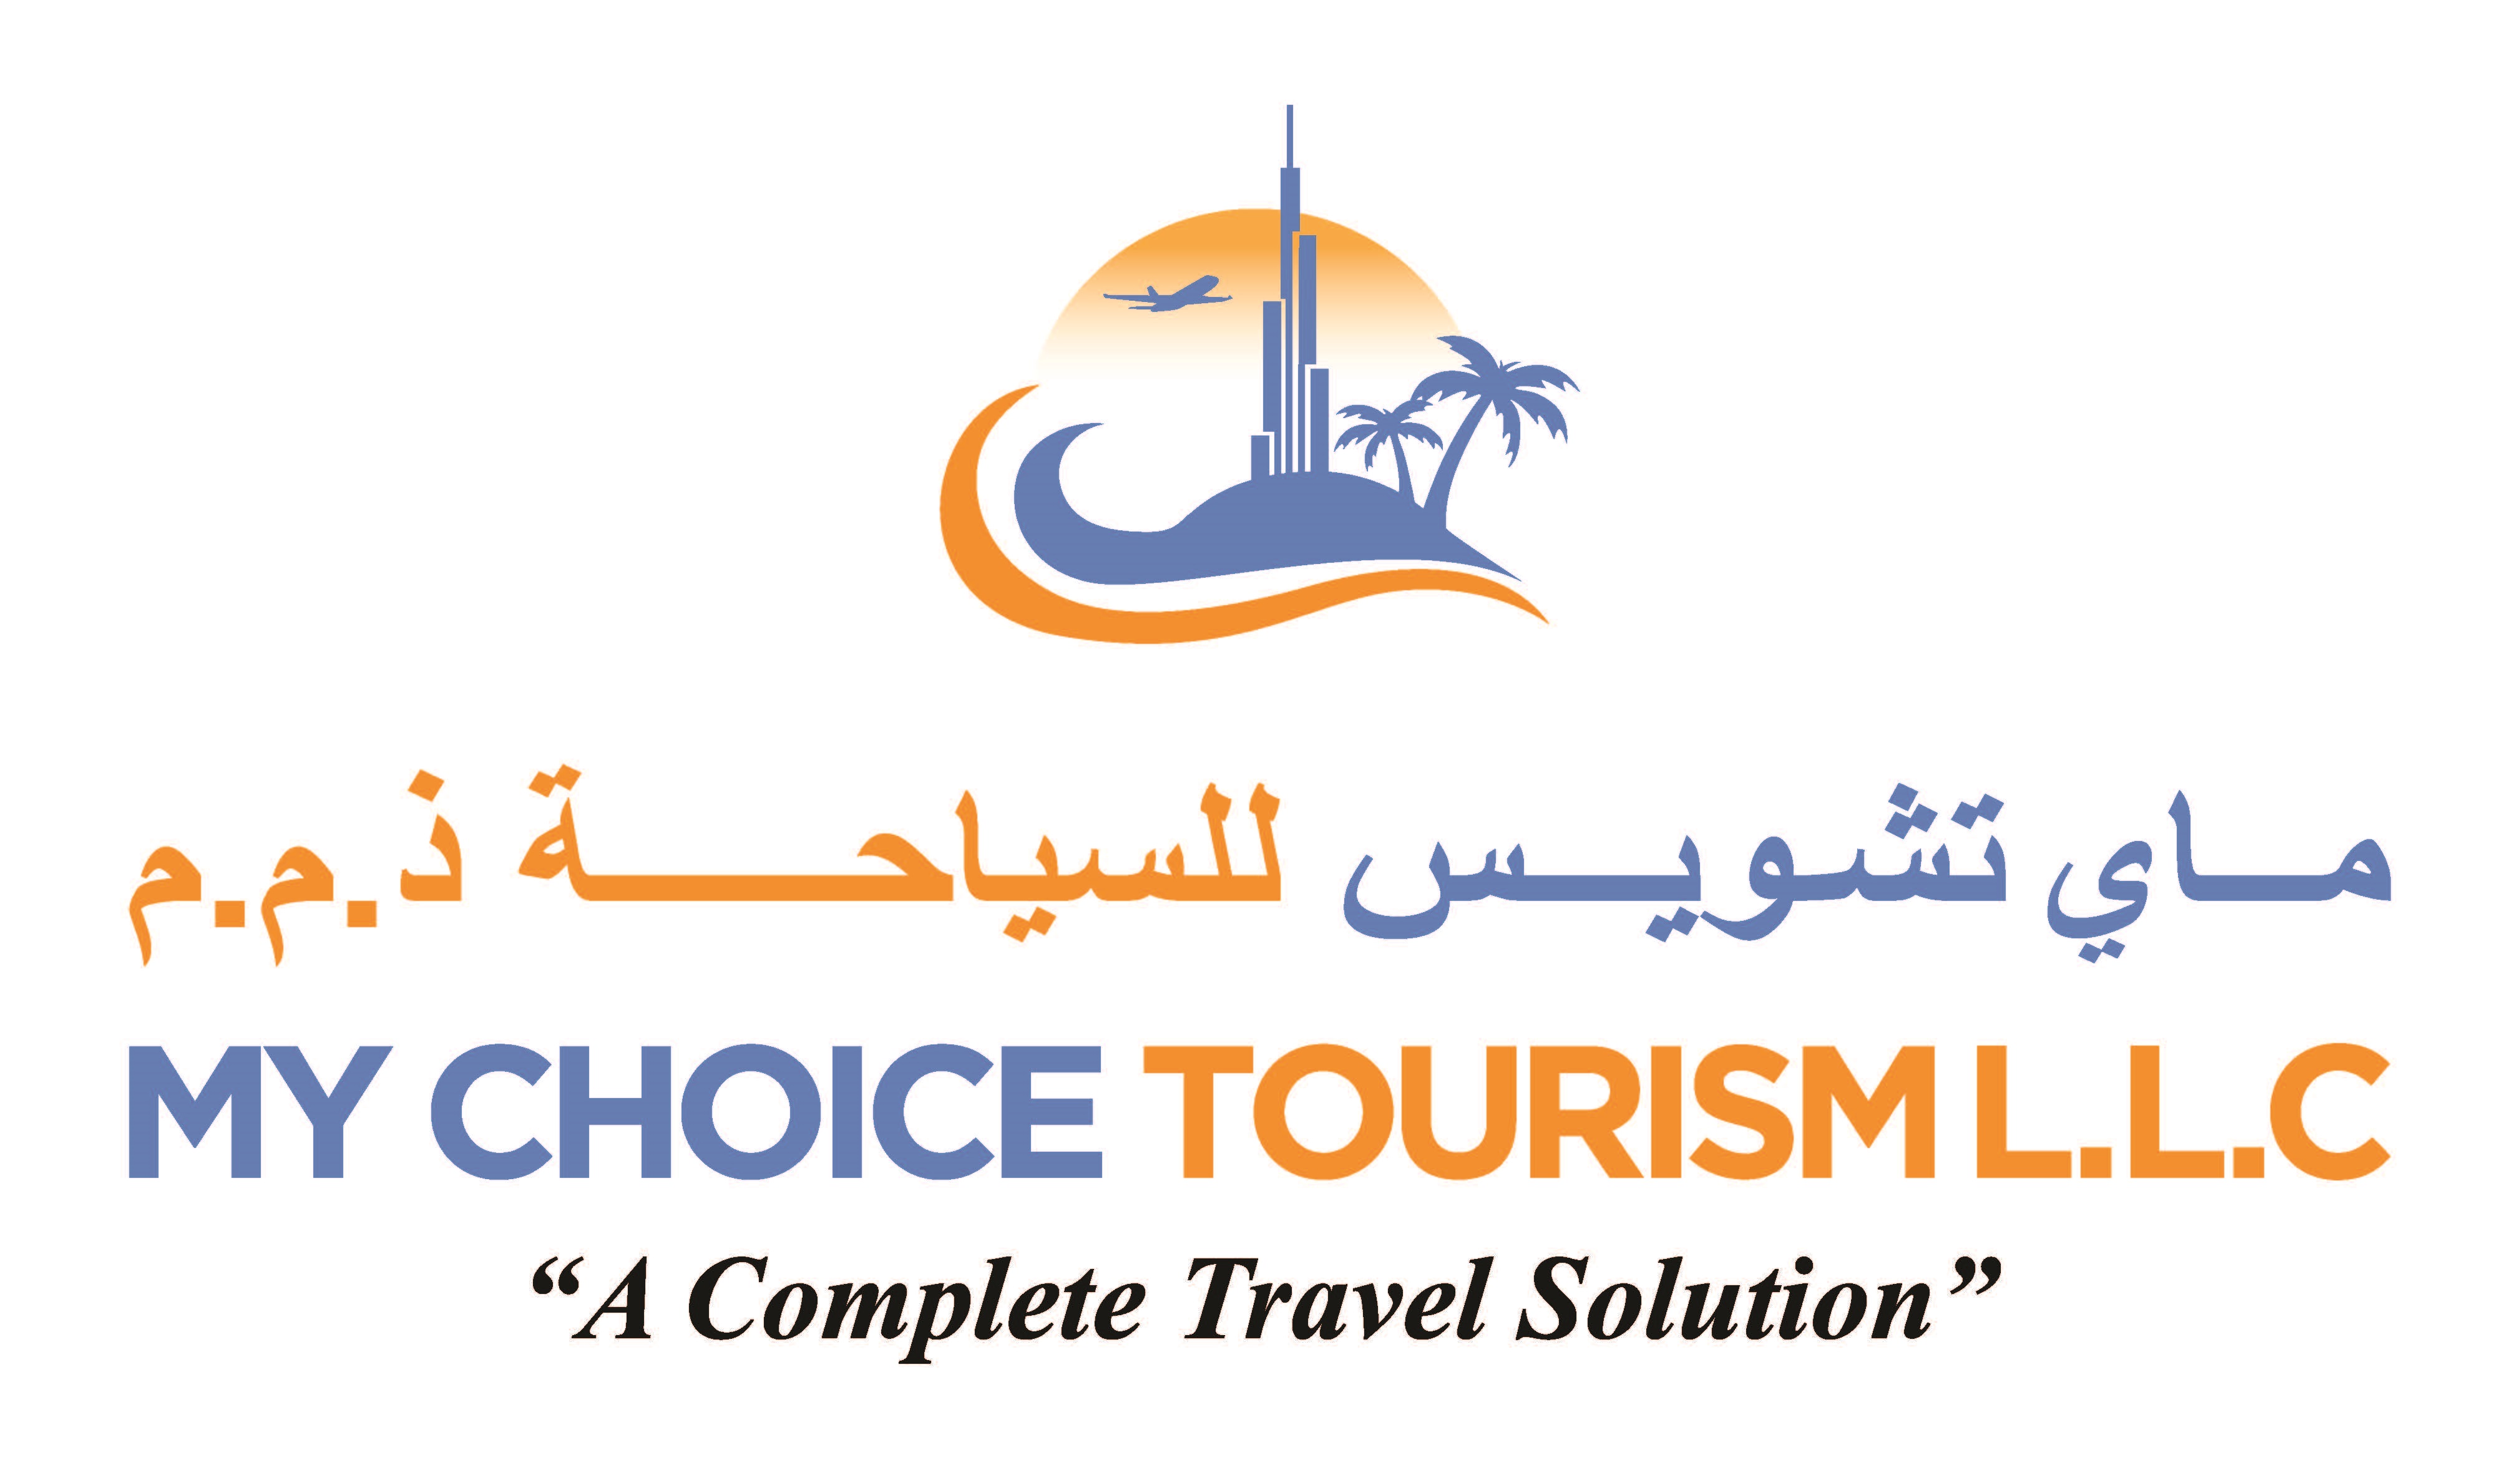 My Choice Tourism LLC